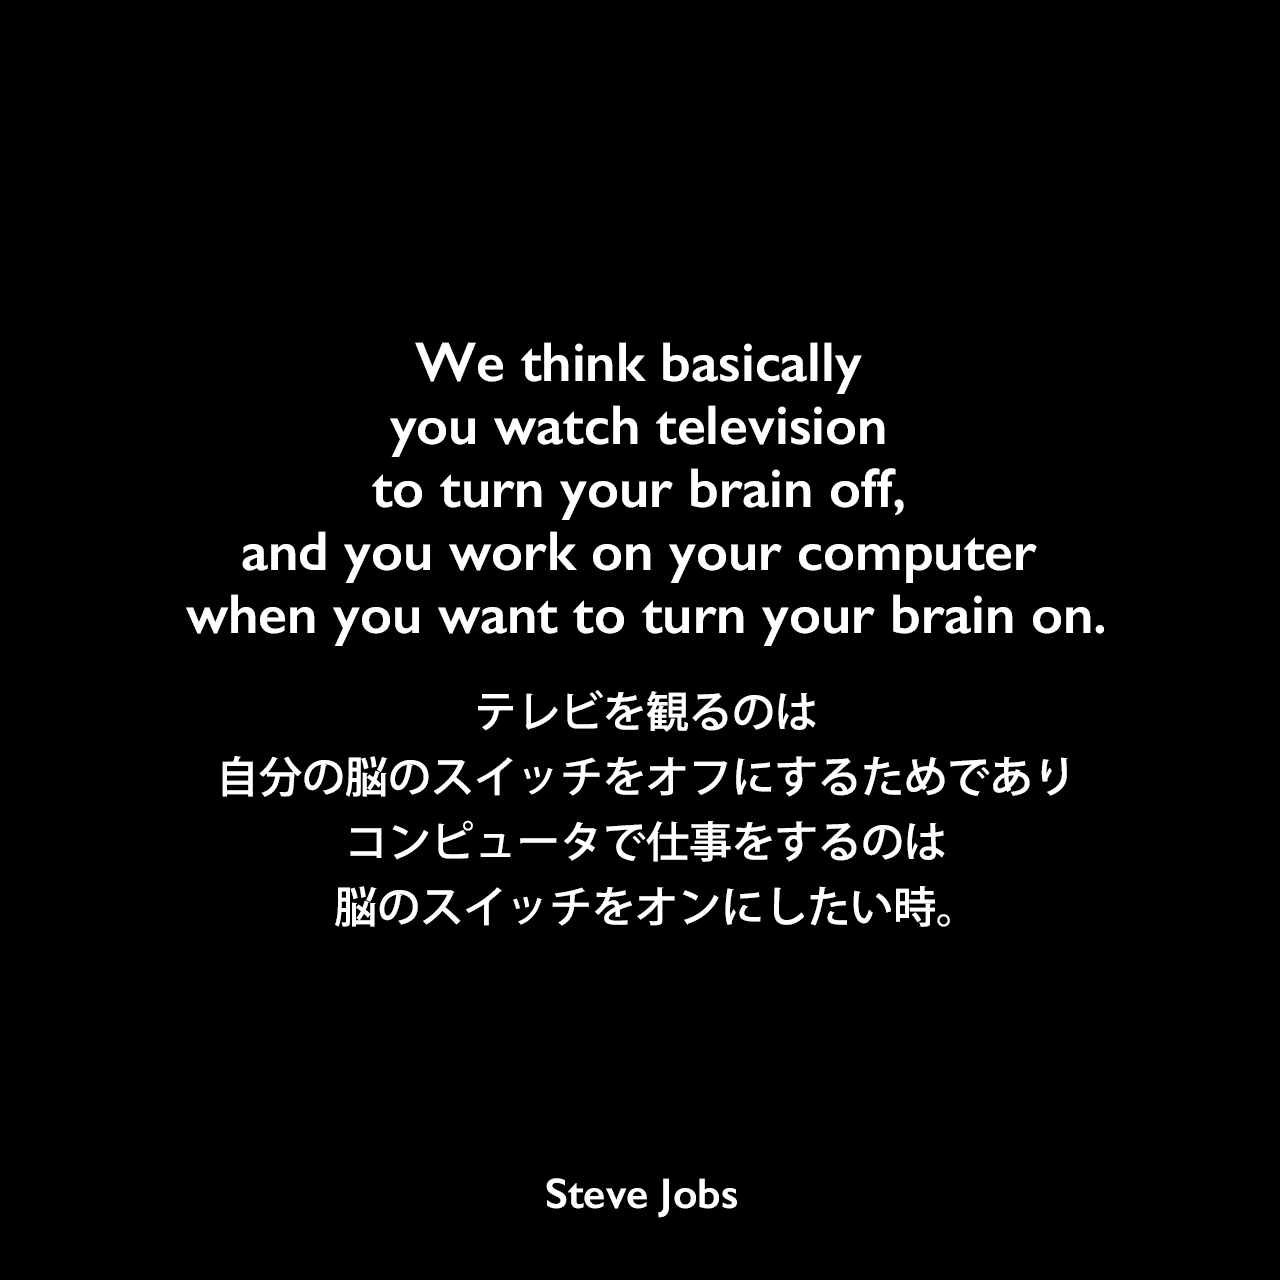 We think basically you watch television to turn your brain off, and you work on your computer when you want to turn your brain on.テレビを観るのは、自分の脳のスイッチをオフにするためであり、コンピュータで仕事をするのは、脳のスイッチをオンにしたい時。- 2004年2月 Macworld magazineのインタビューよりSteve Jobs